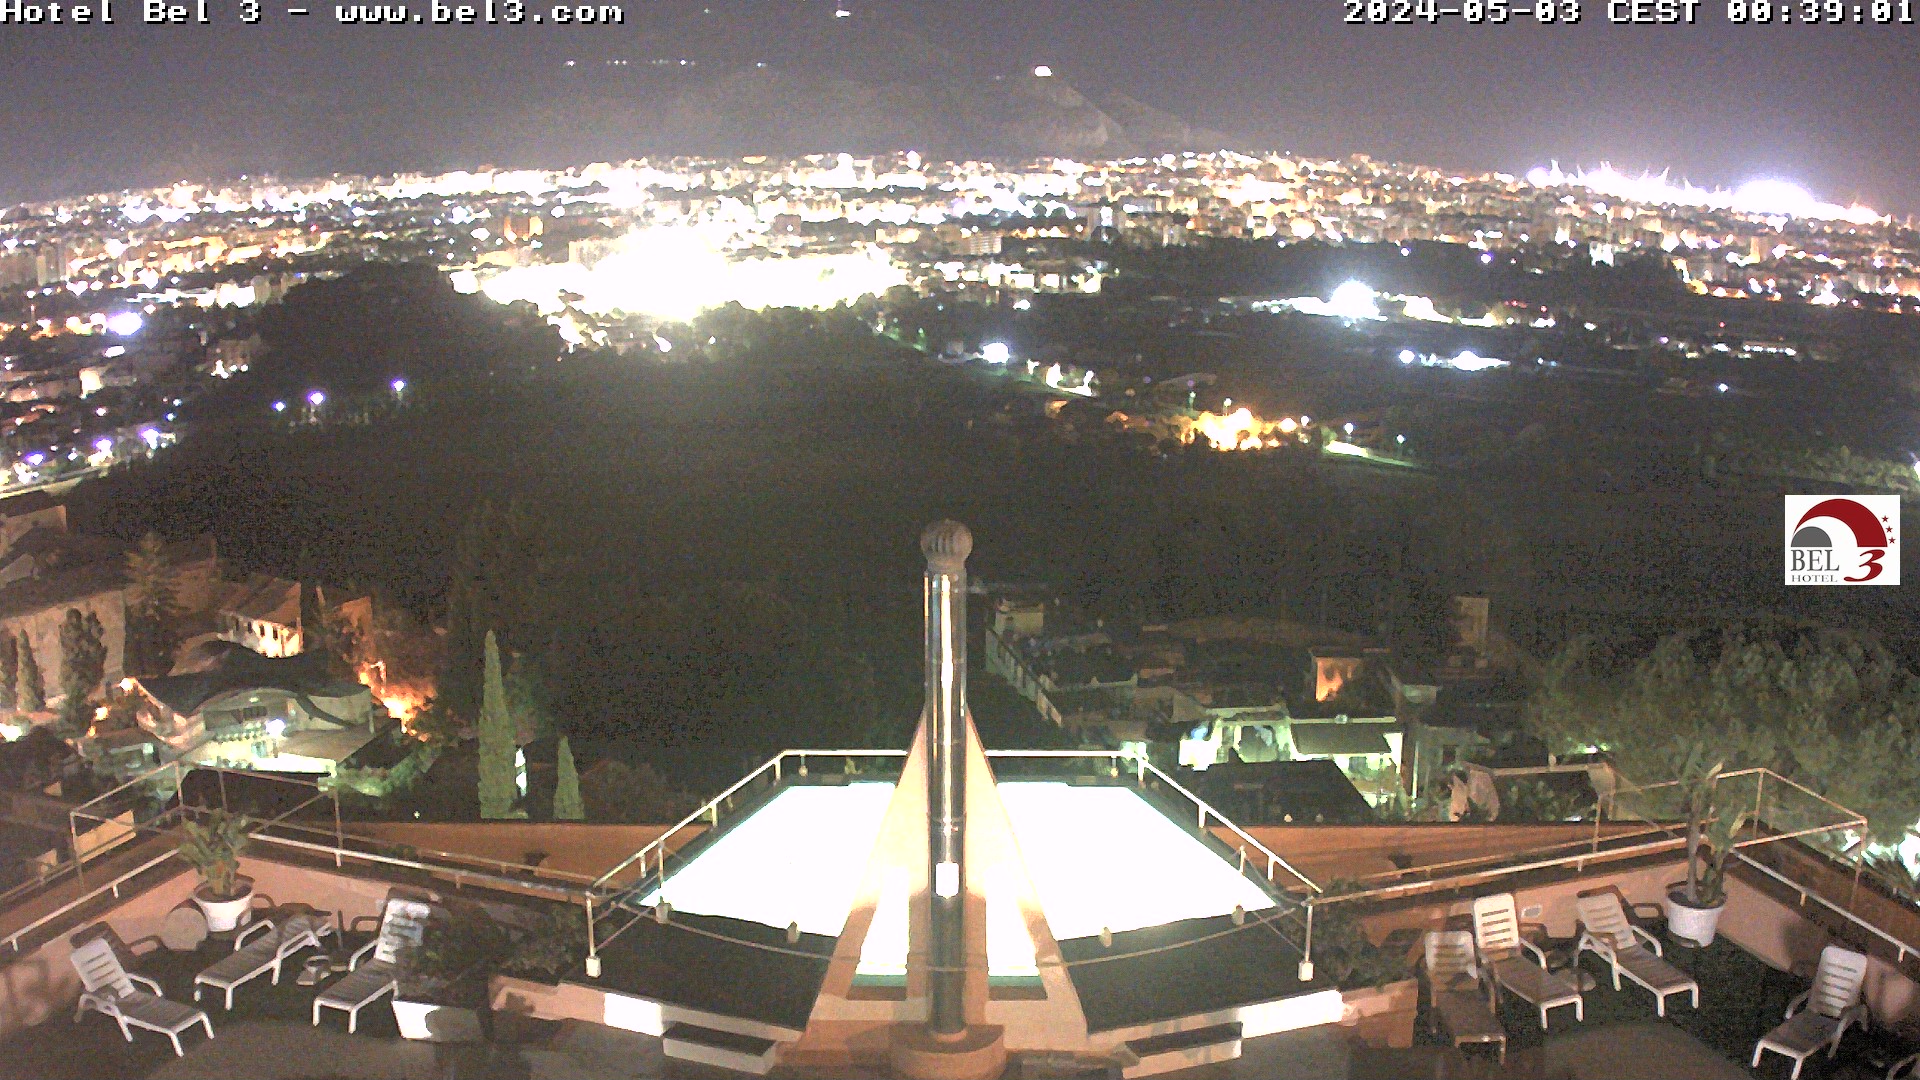 Webcam Palermo - Hotel Bel 3